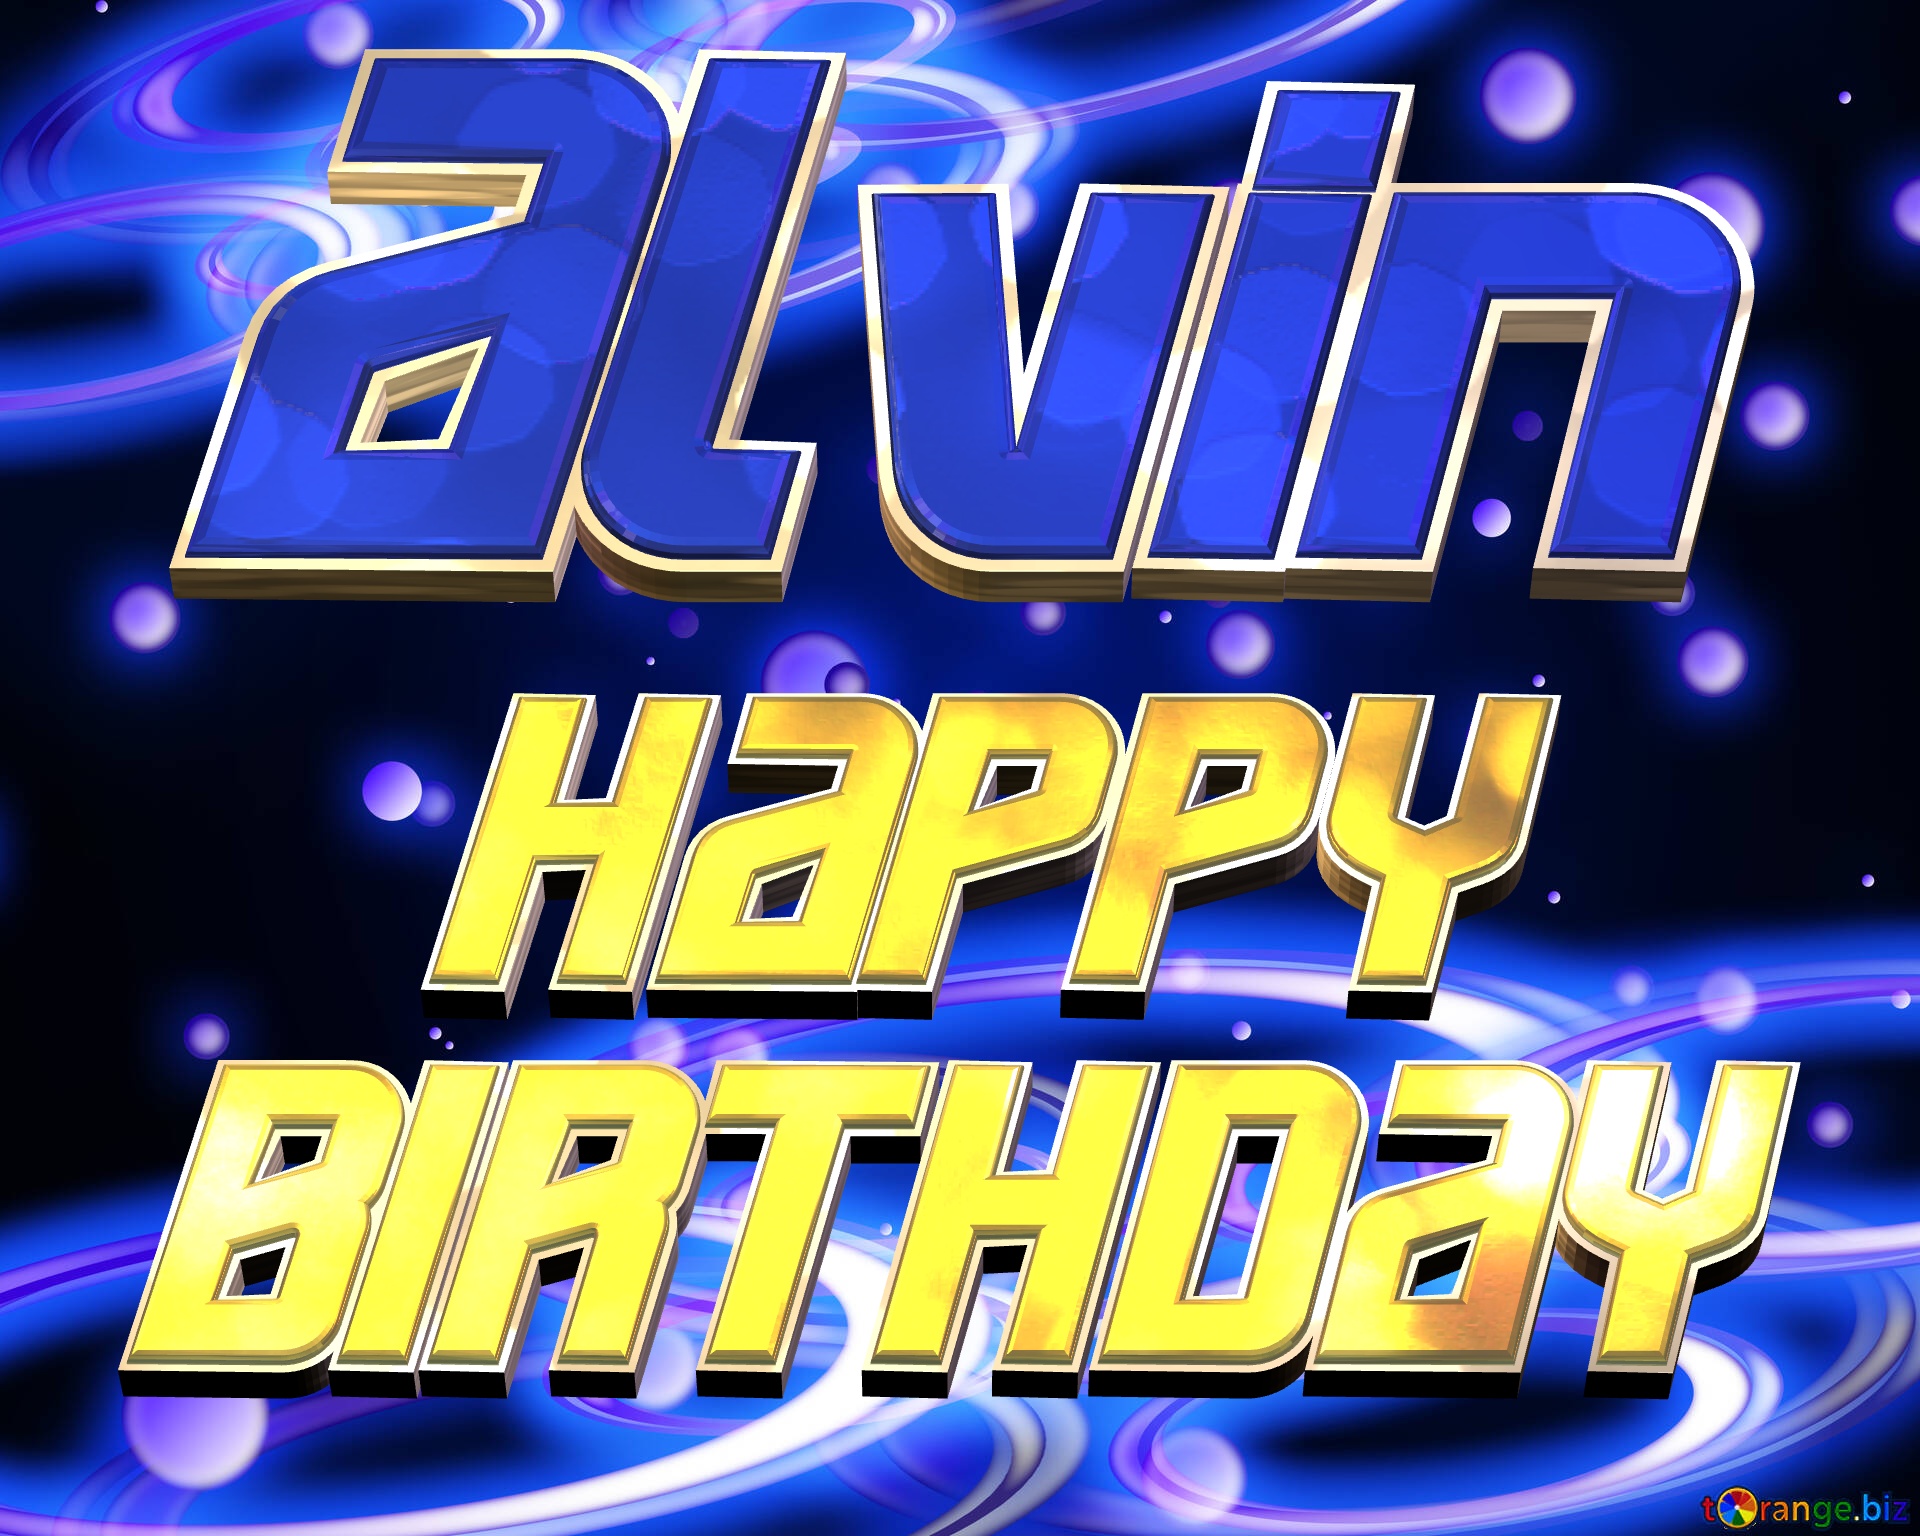 Alvin Space Happy Birthday! Technology background №54919